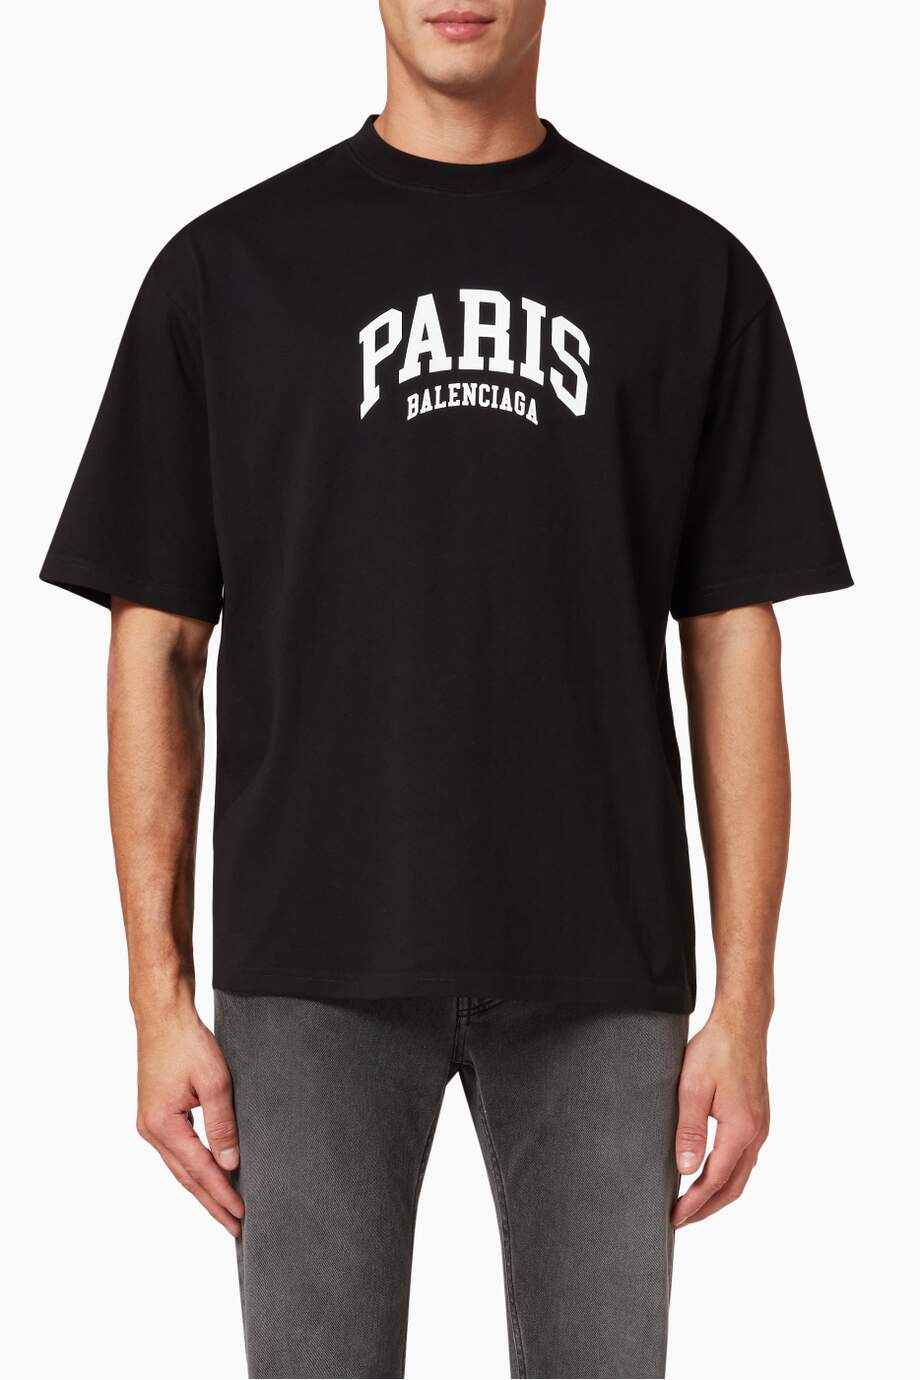 BALENCIAGA Paris Medium Fit T-shirt in Cotton Jersey